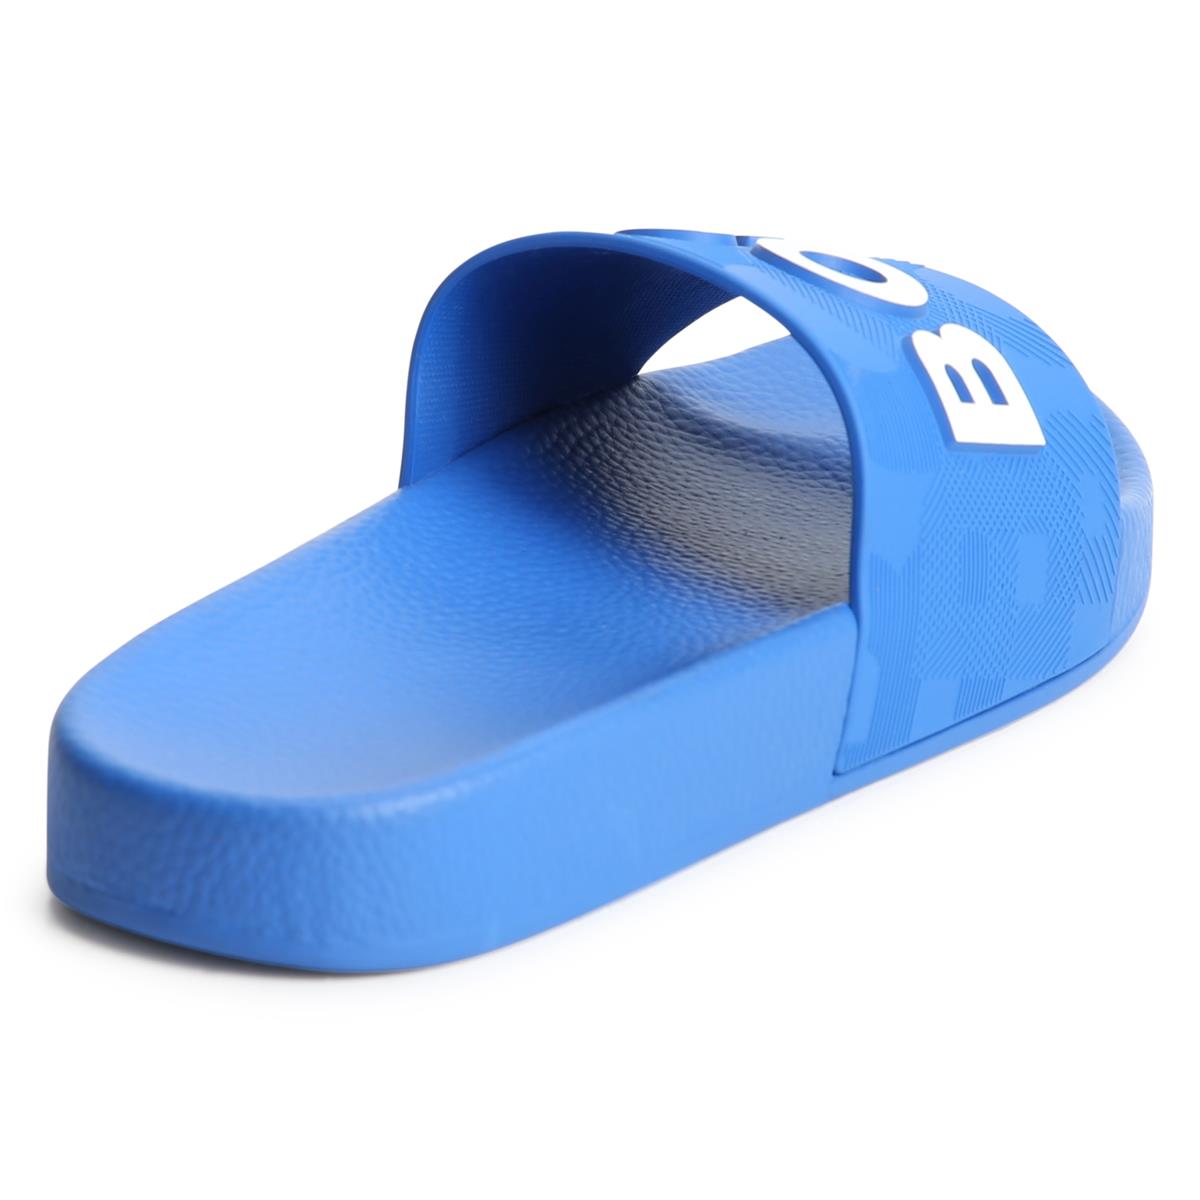 Boys Blue Sandals